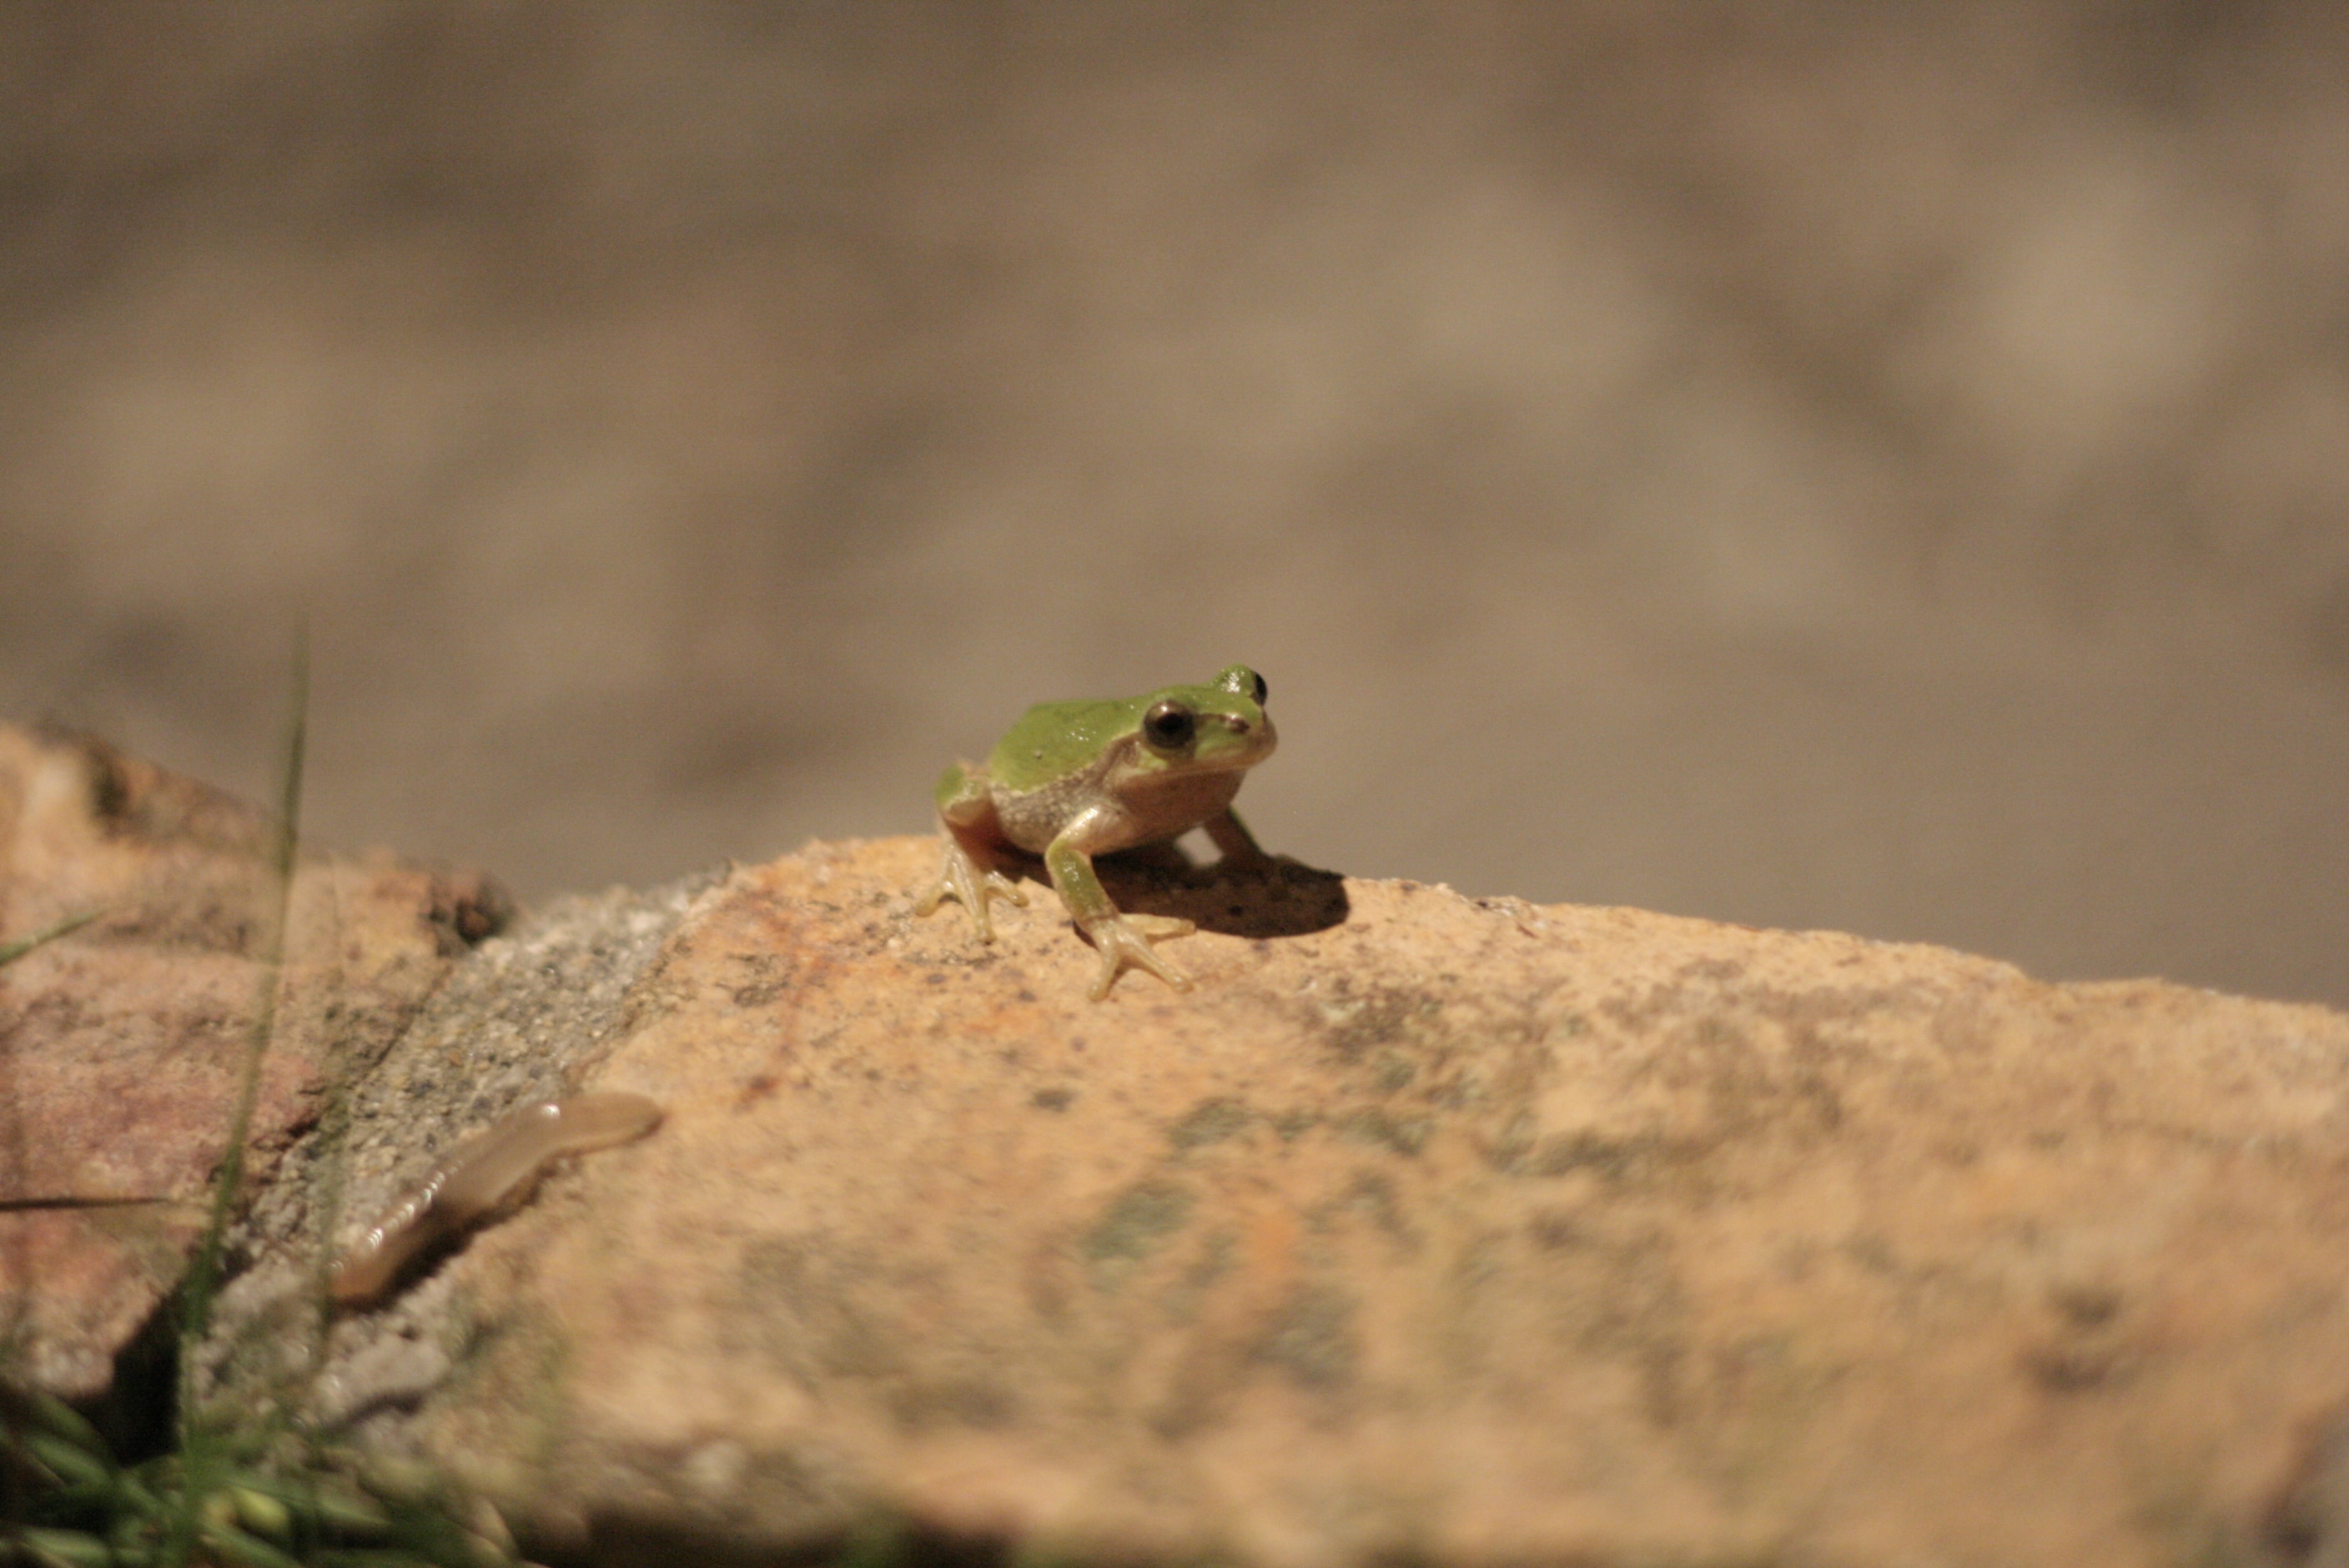 green frog near brown rock